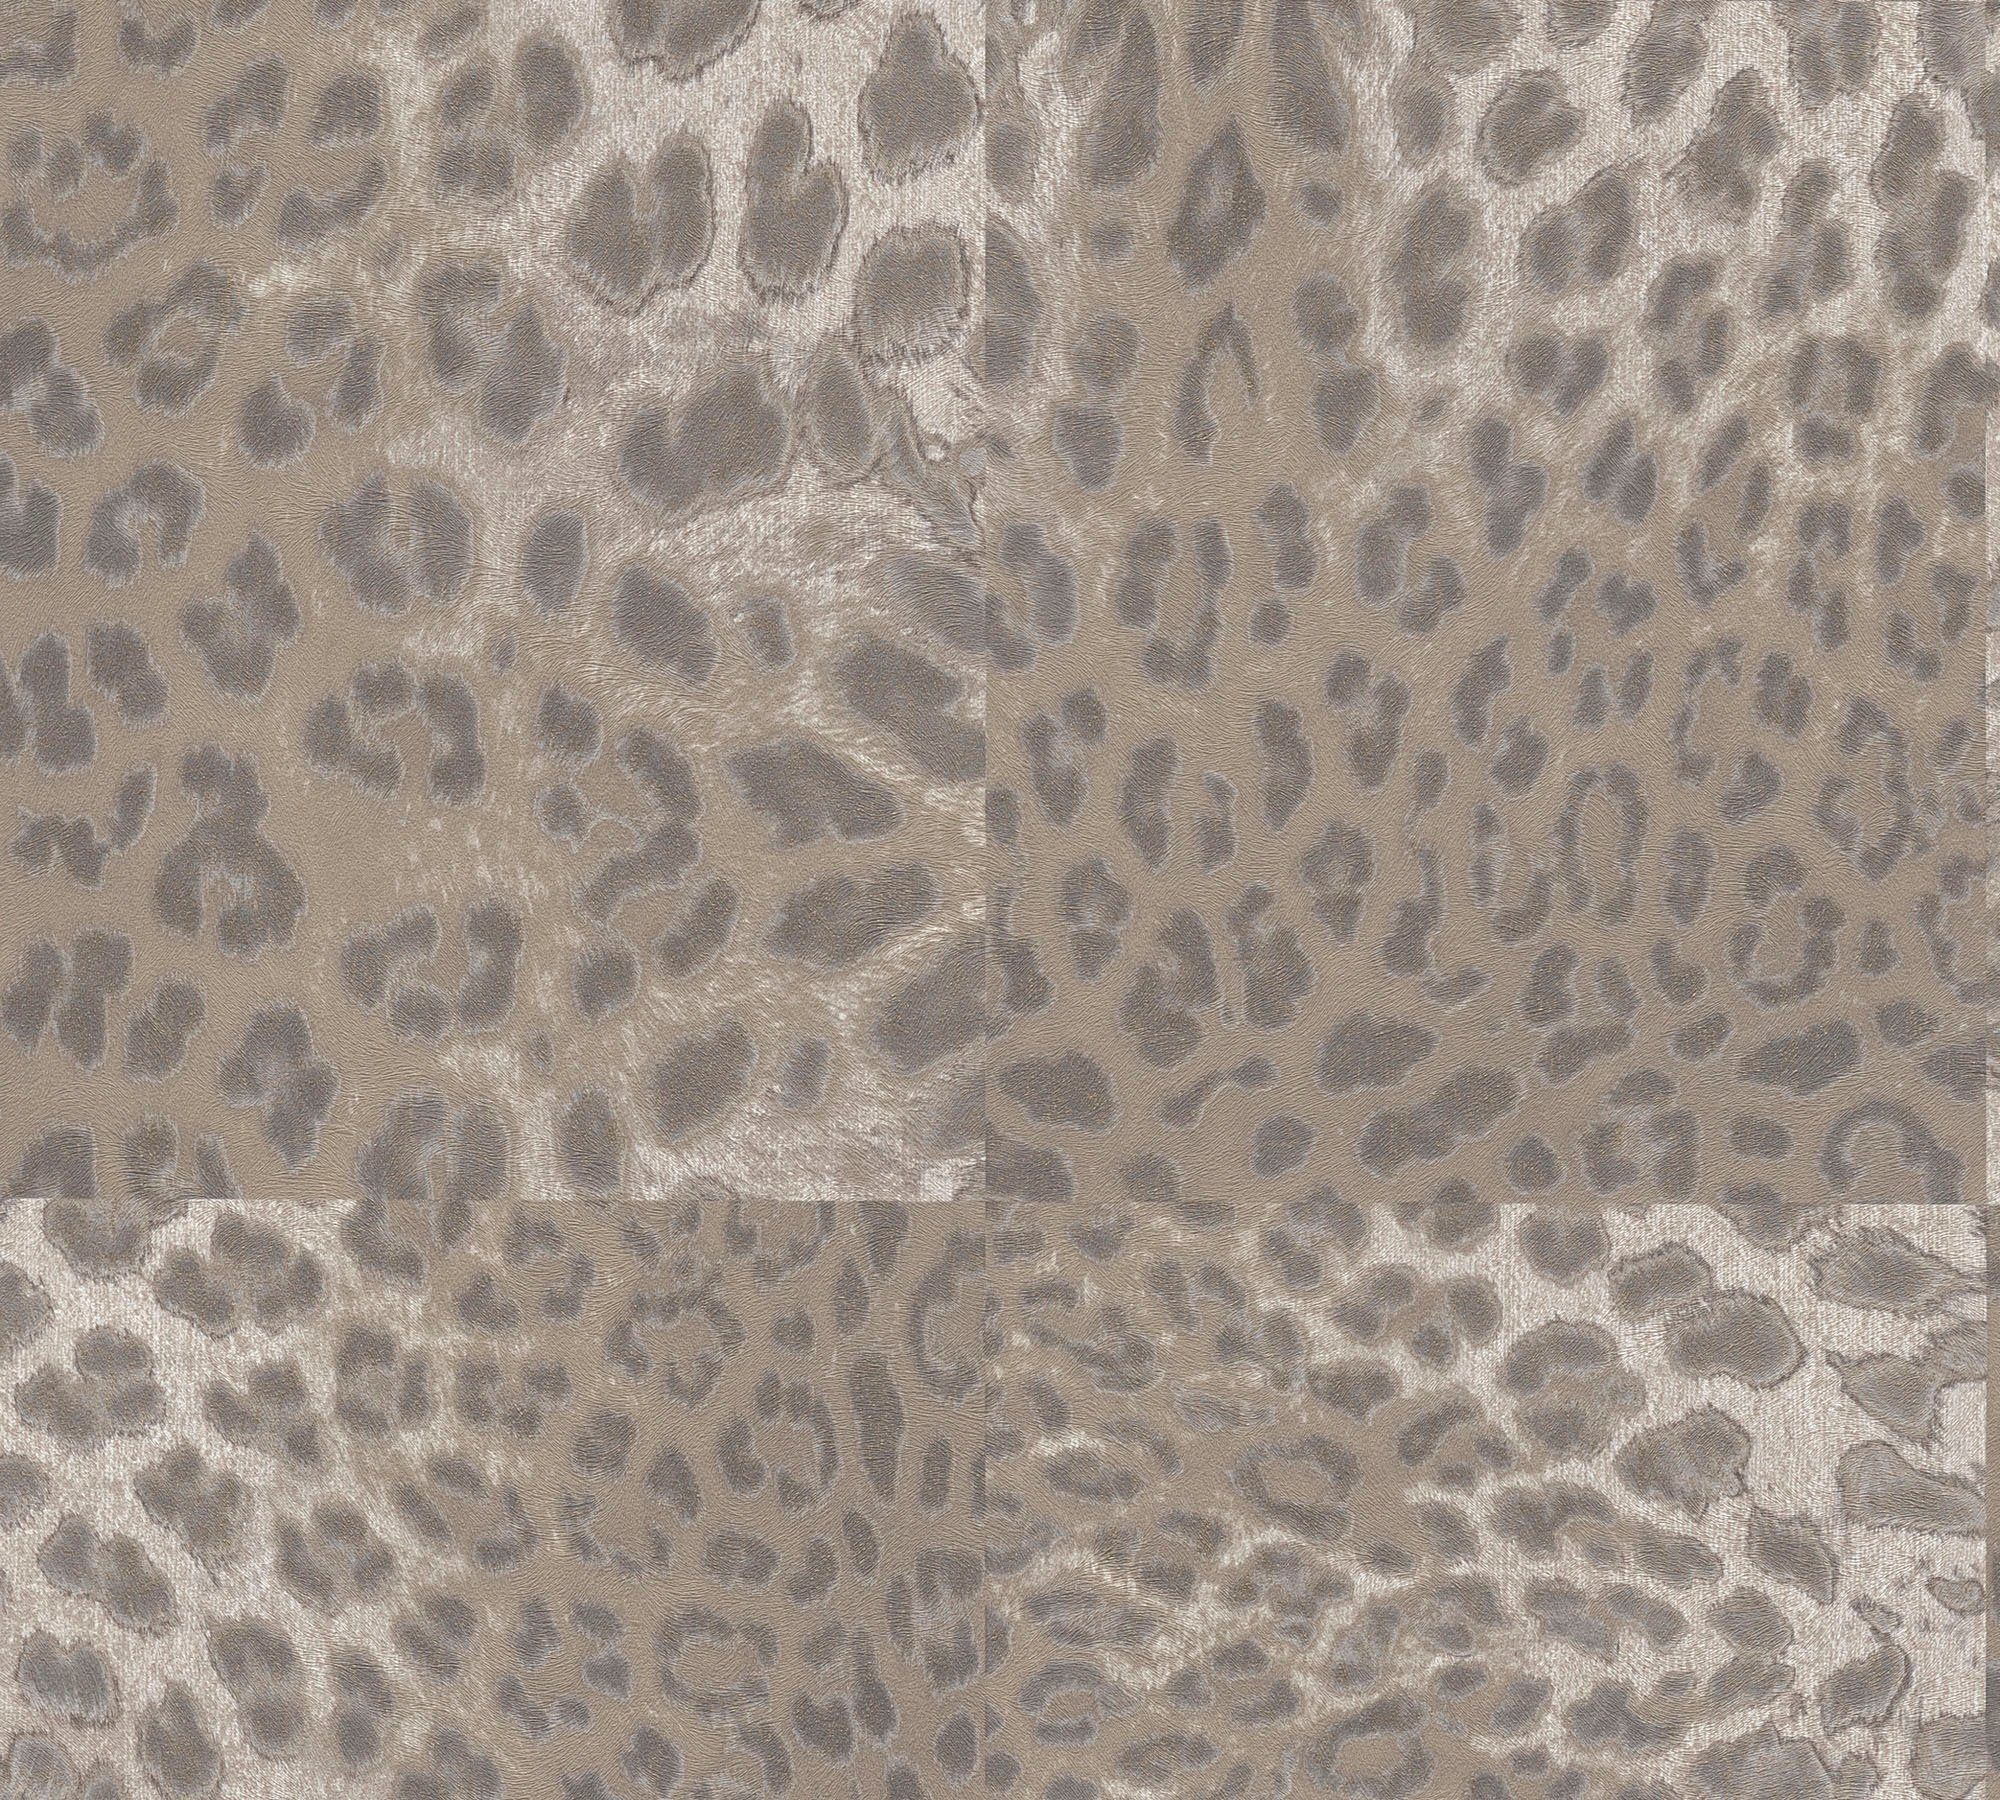 Leopardenmuster Fellimitat, animal Vliestapete living walls gemustert, Tapete Lodge, strukturiert, Desert print, grau/weiß/braun